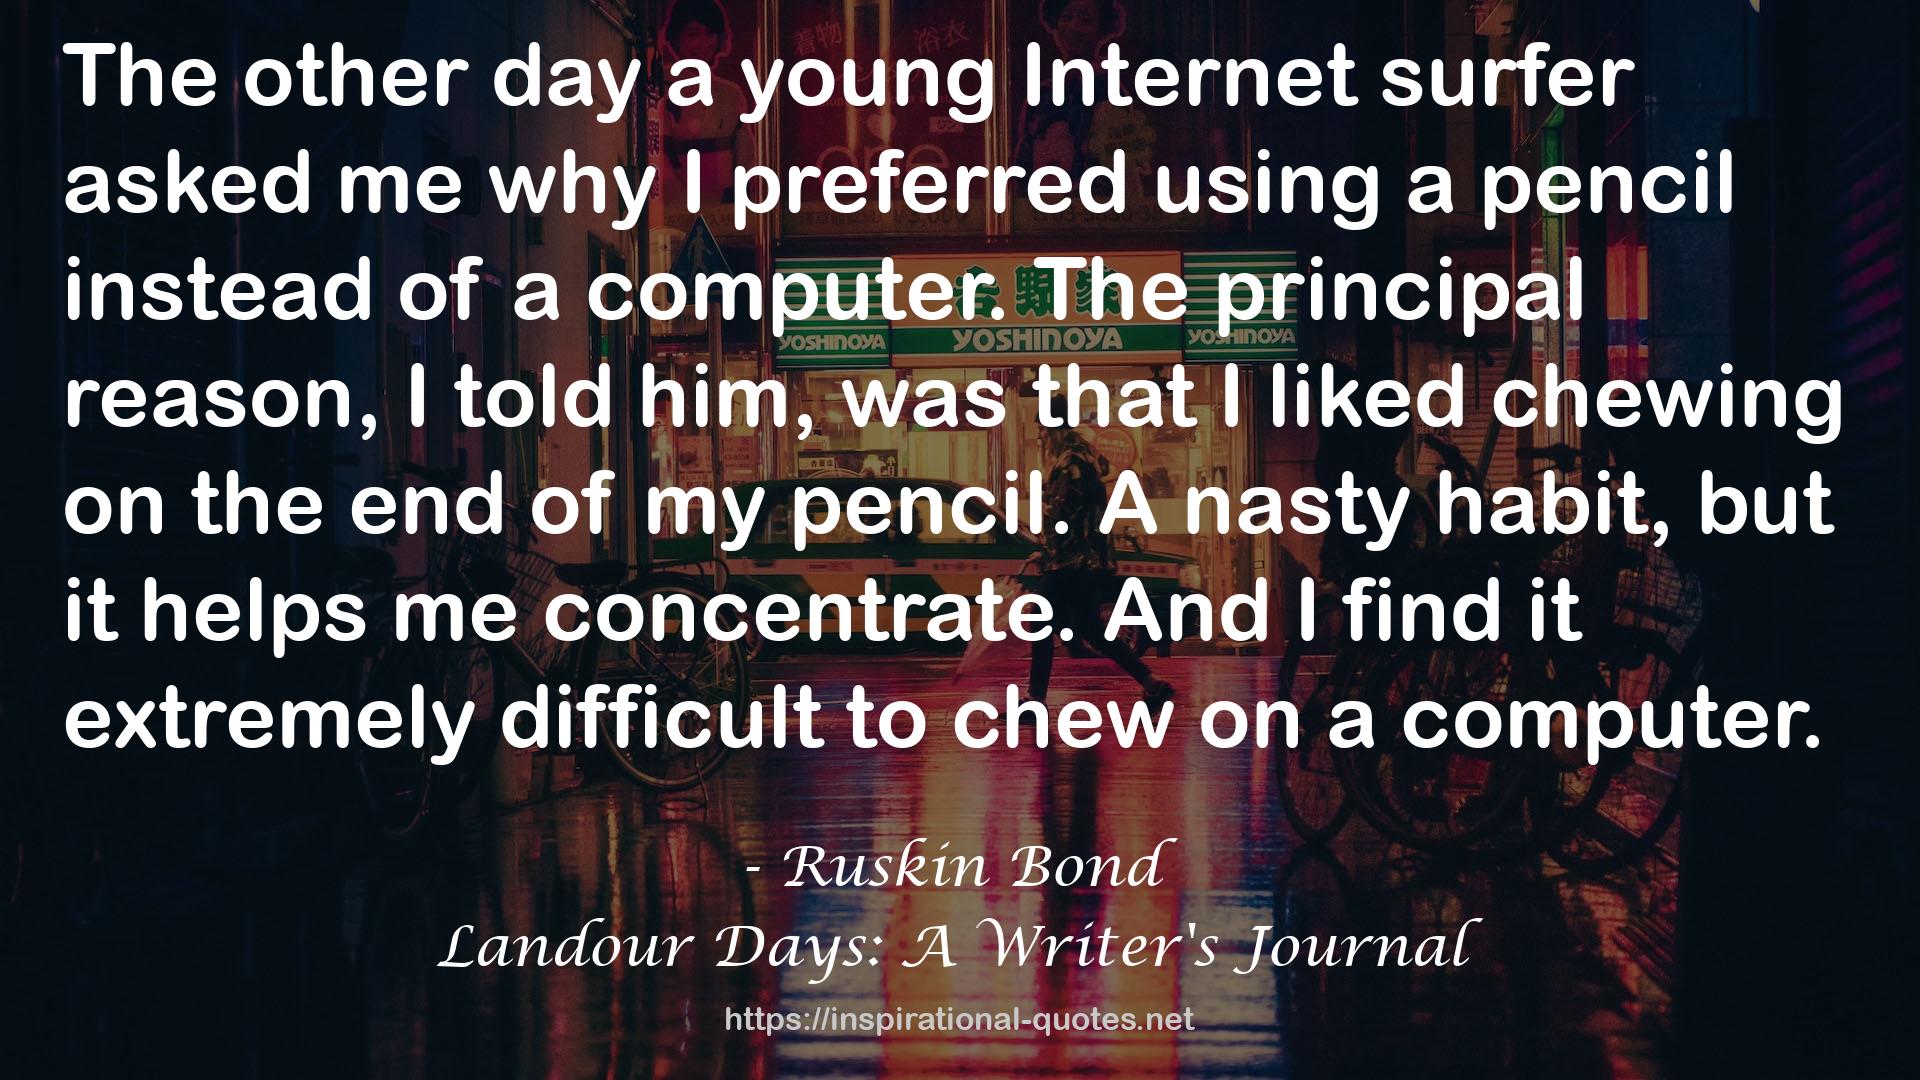 Landour Days: A Writer's Journal QUOTES